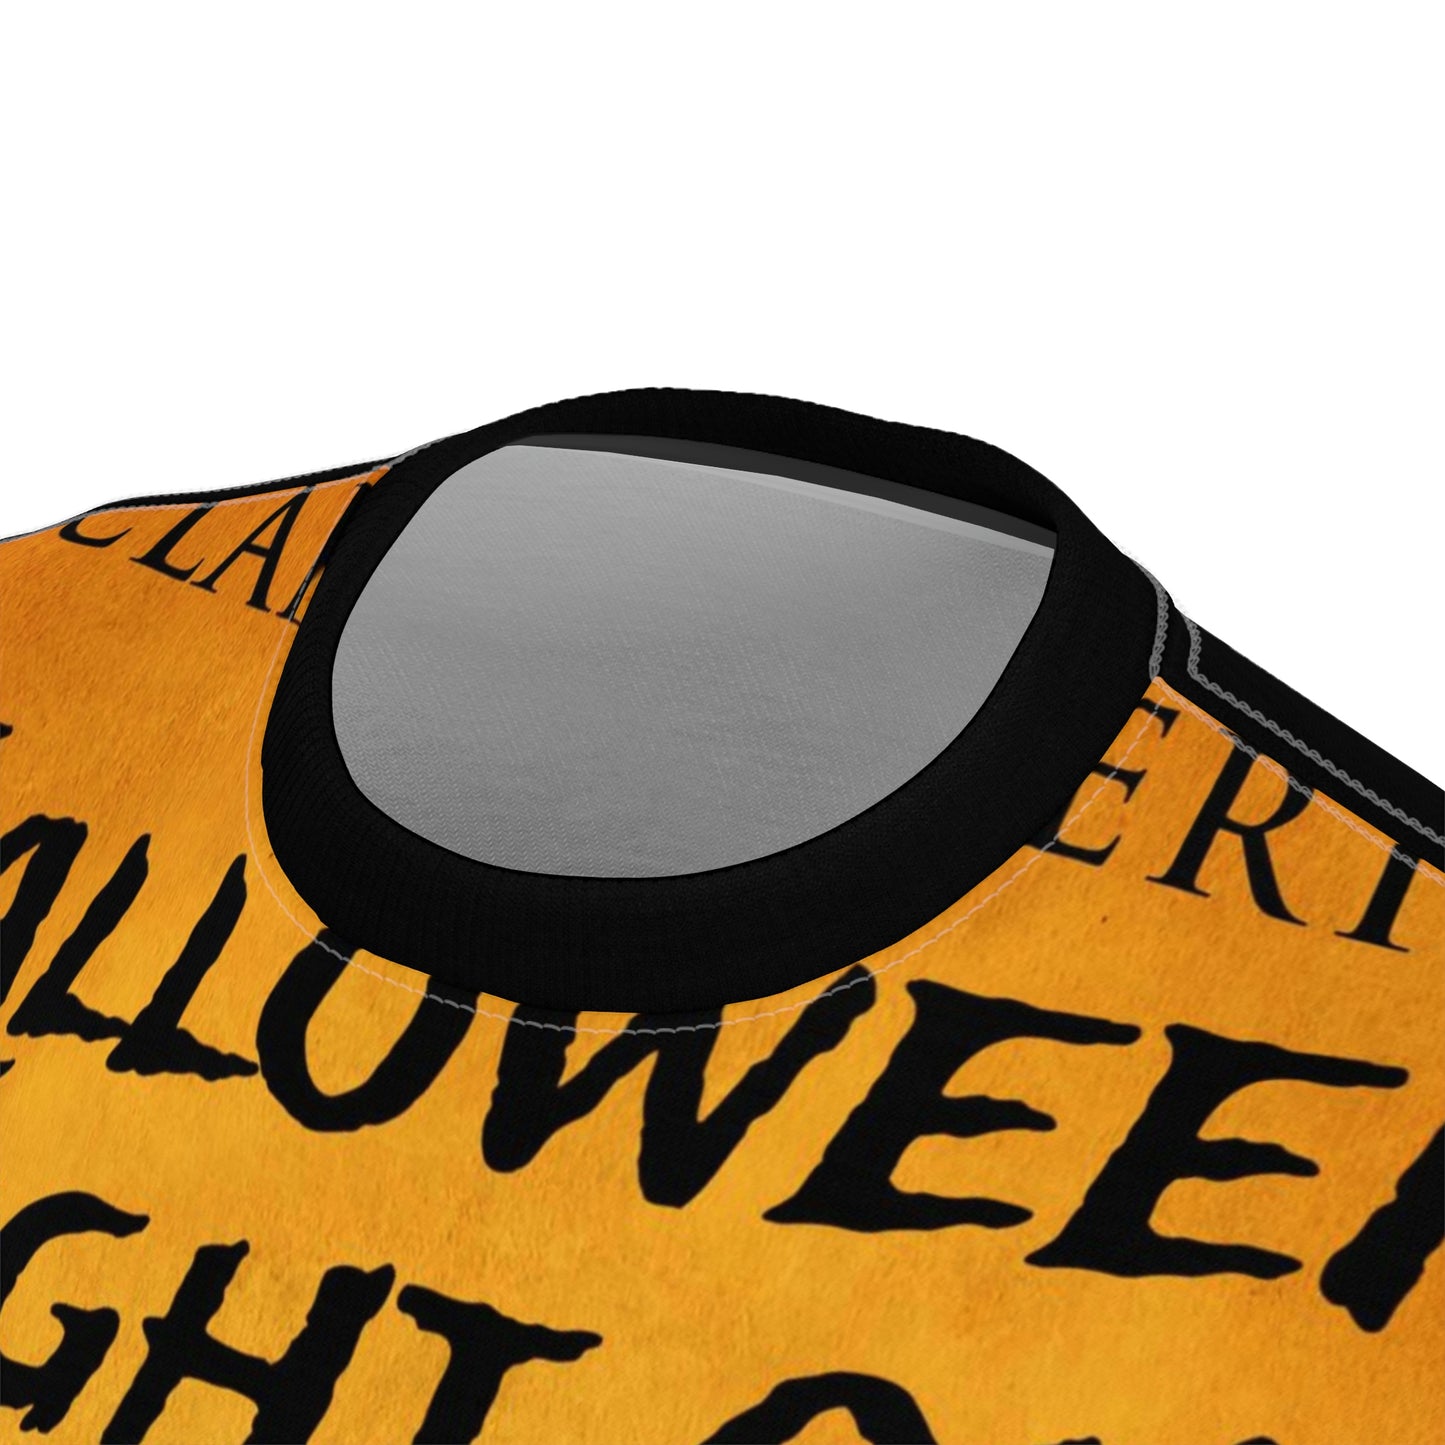 Halloween Night On Monster Island - Unisex All-Over Print Cut & Sew T-Shirt